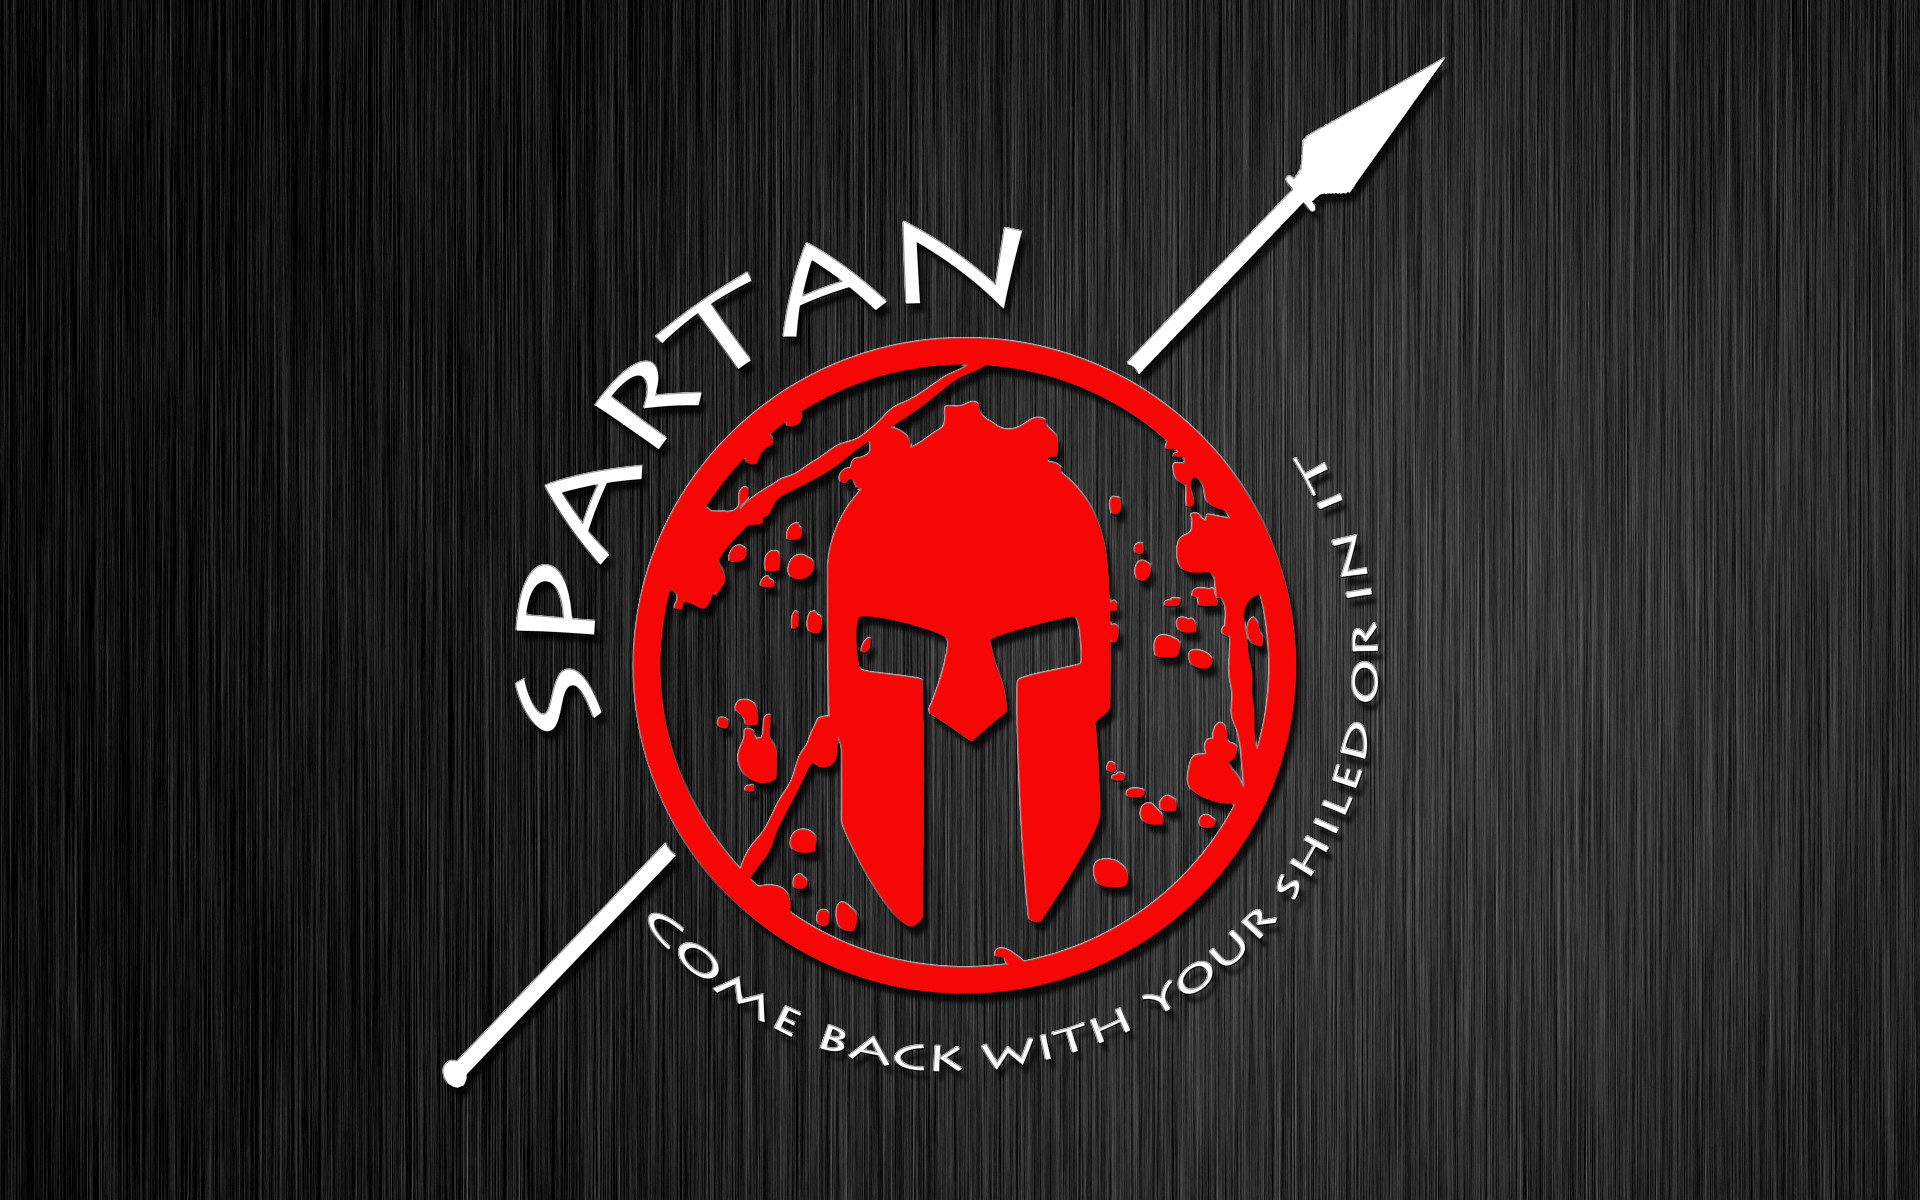 spartan race wallpaper